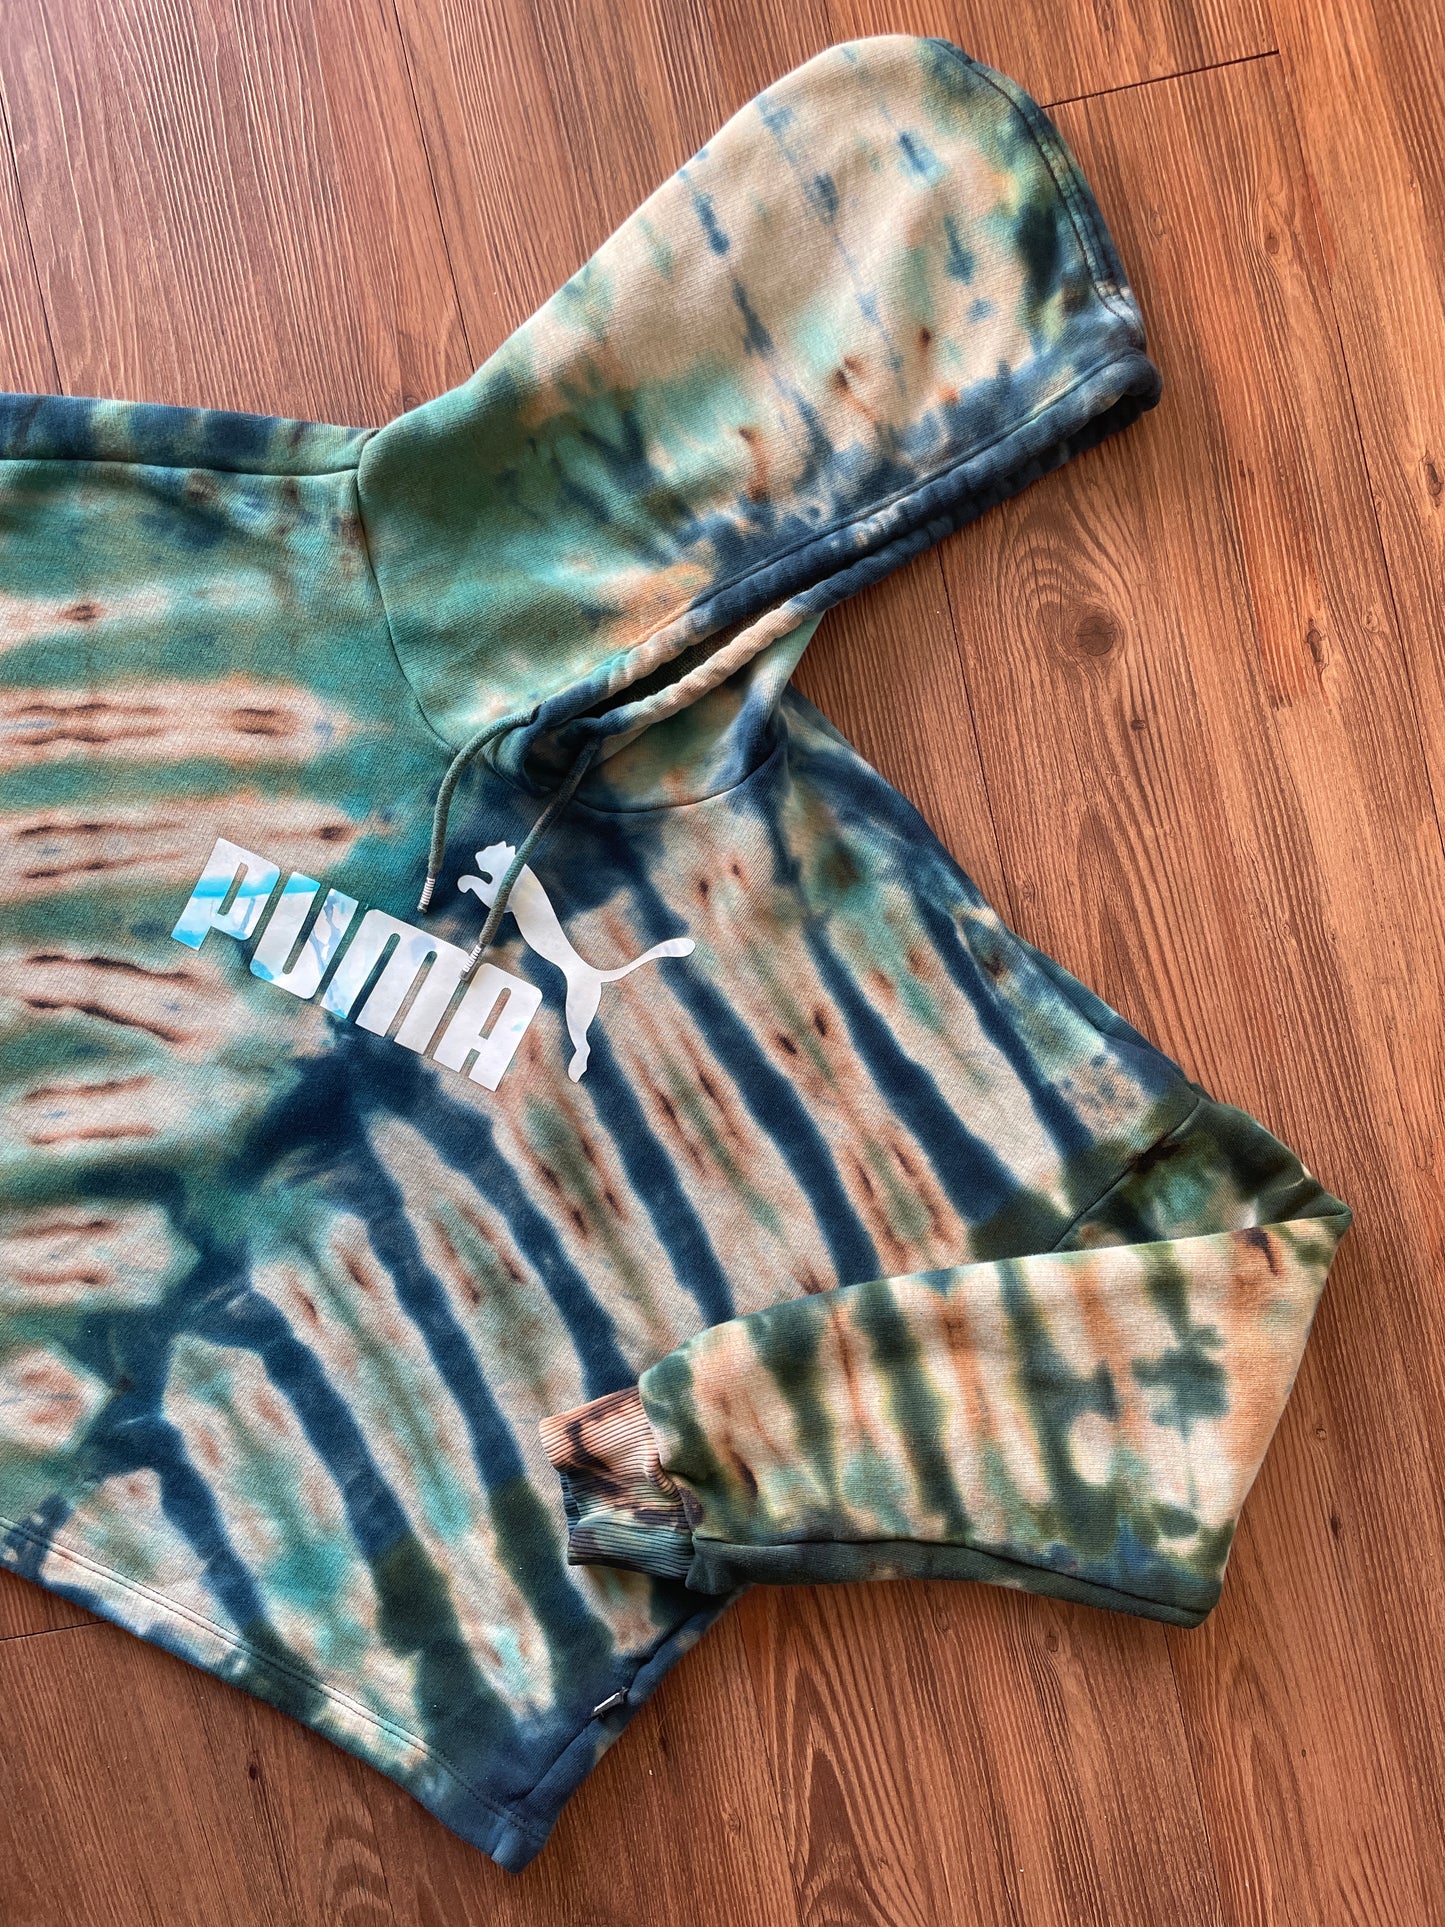 MEDIUM Women’s Puma Handmade Tie Dye Cropped Hoodie | One-Of-a-Kind Black and Blue Long Sleeve Sweatshirt